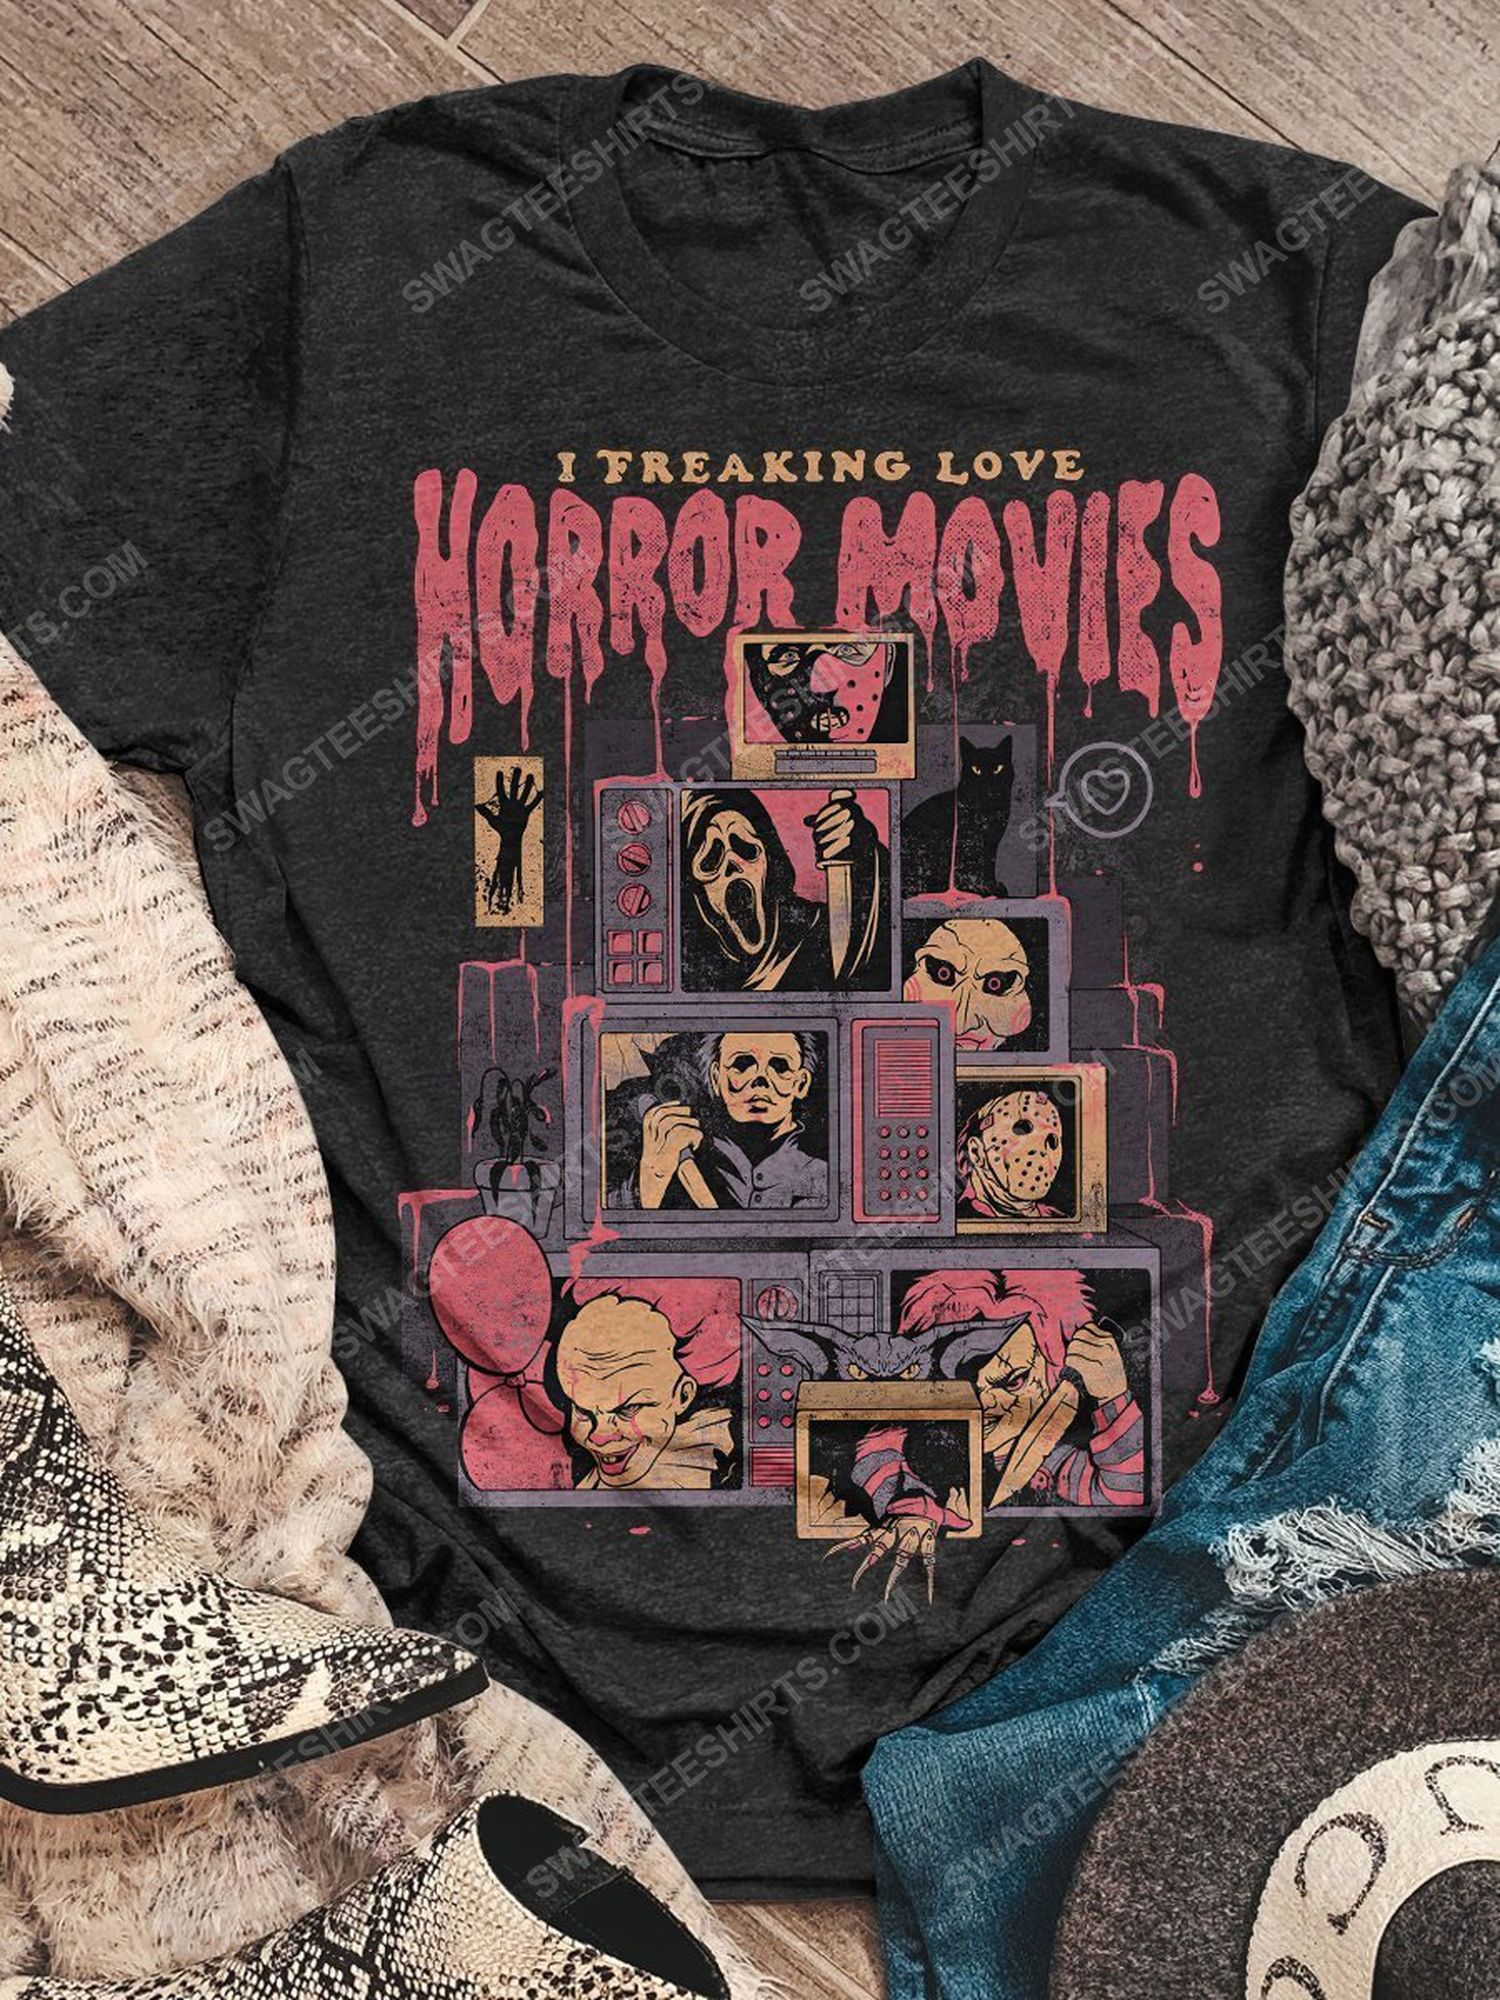 Halloween i freaking love horror movies vintage shirt 1 - Copy (2)